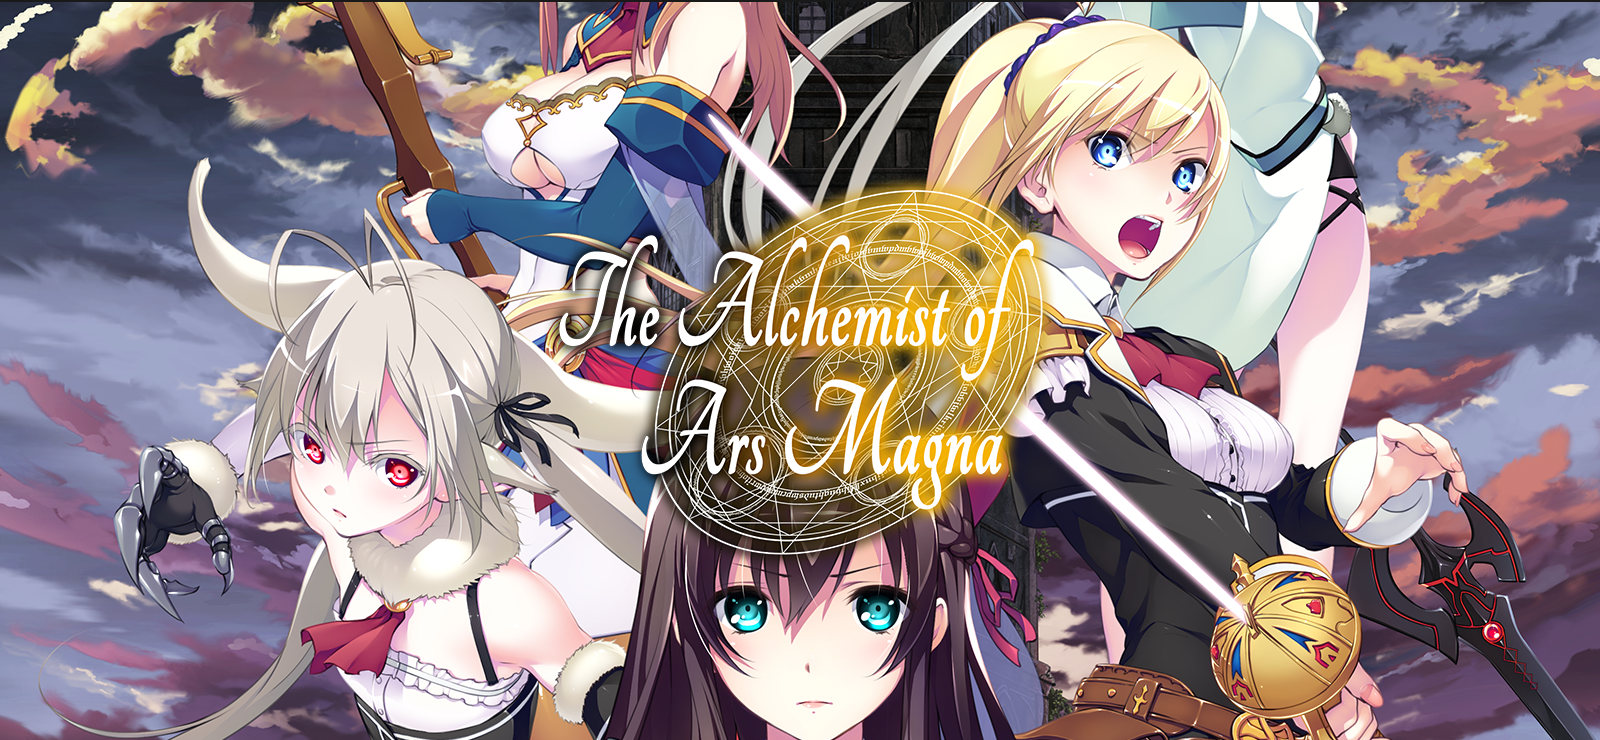 Boxart for The Alchemist of Ars Magna